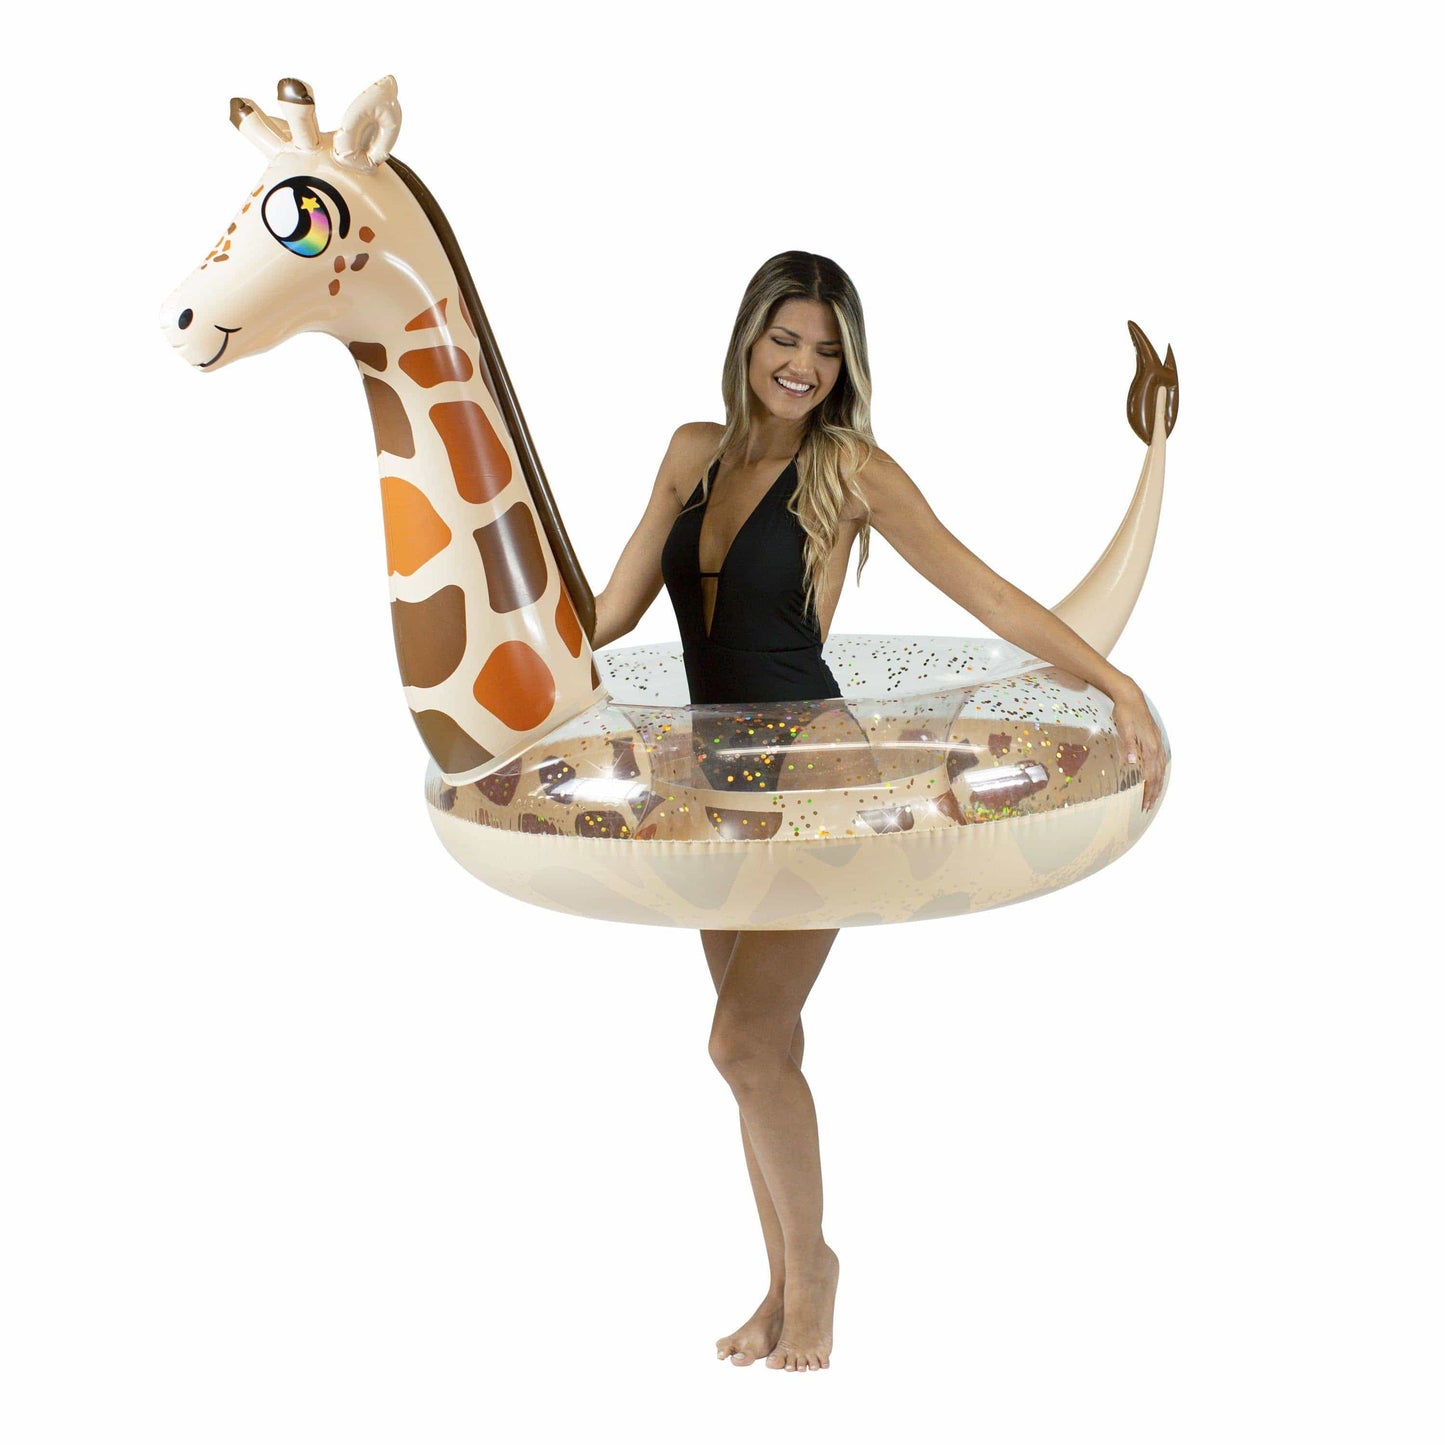 Inflatable Giraffe Animal Pool Tube PoolCandy